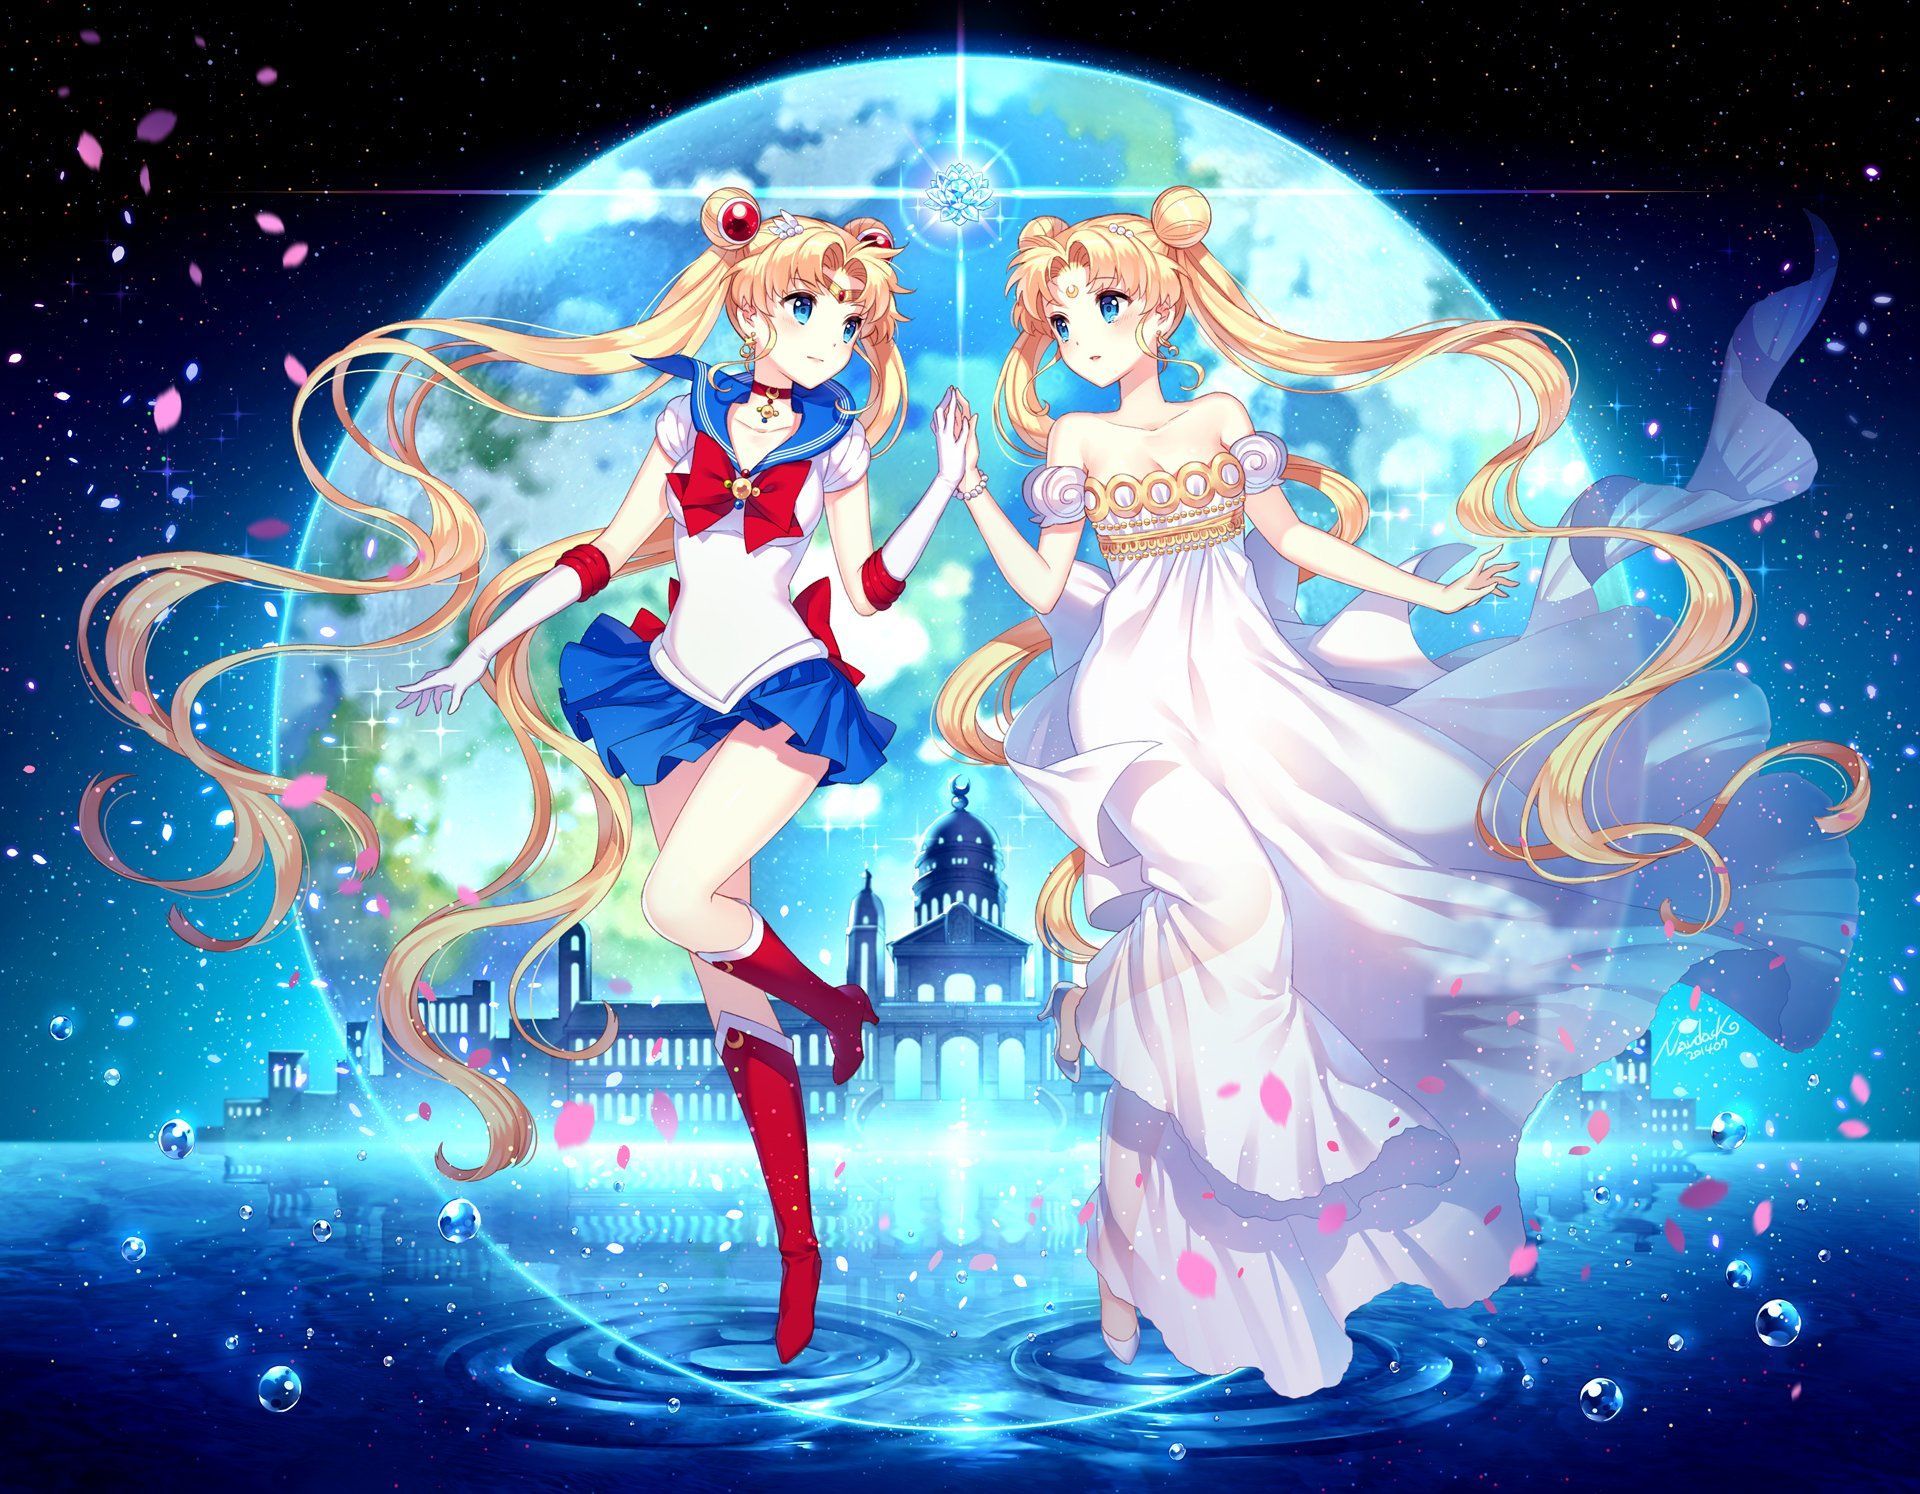 Fondos de pantalla de Sailor Moon - FondosMil